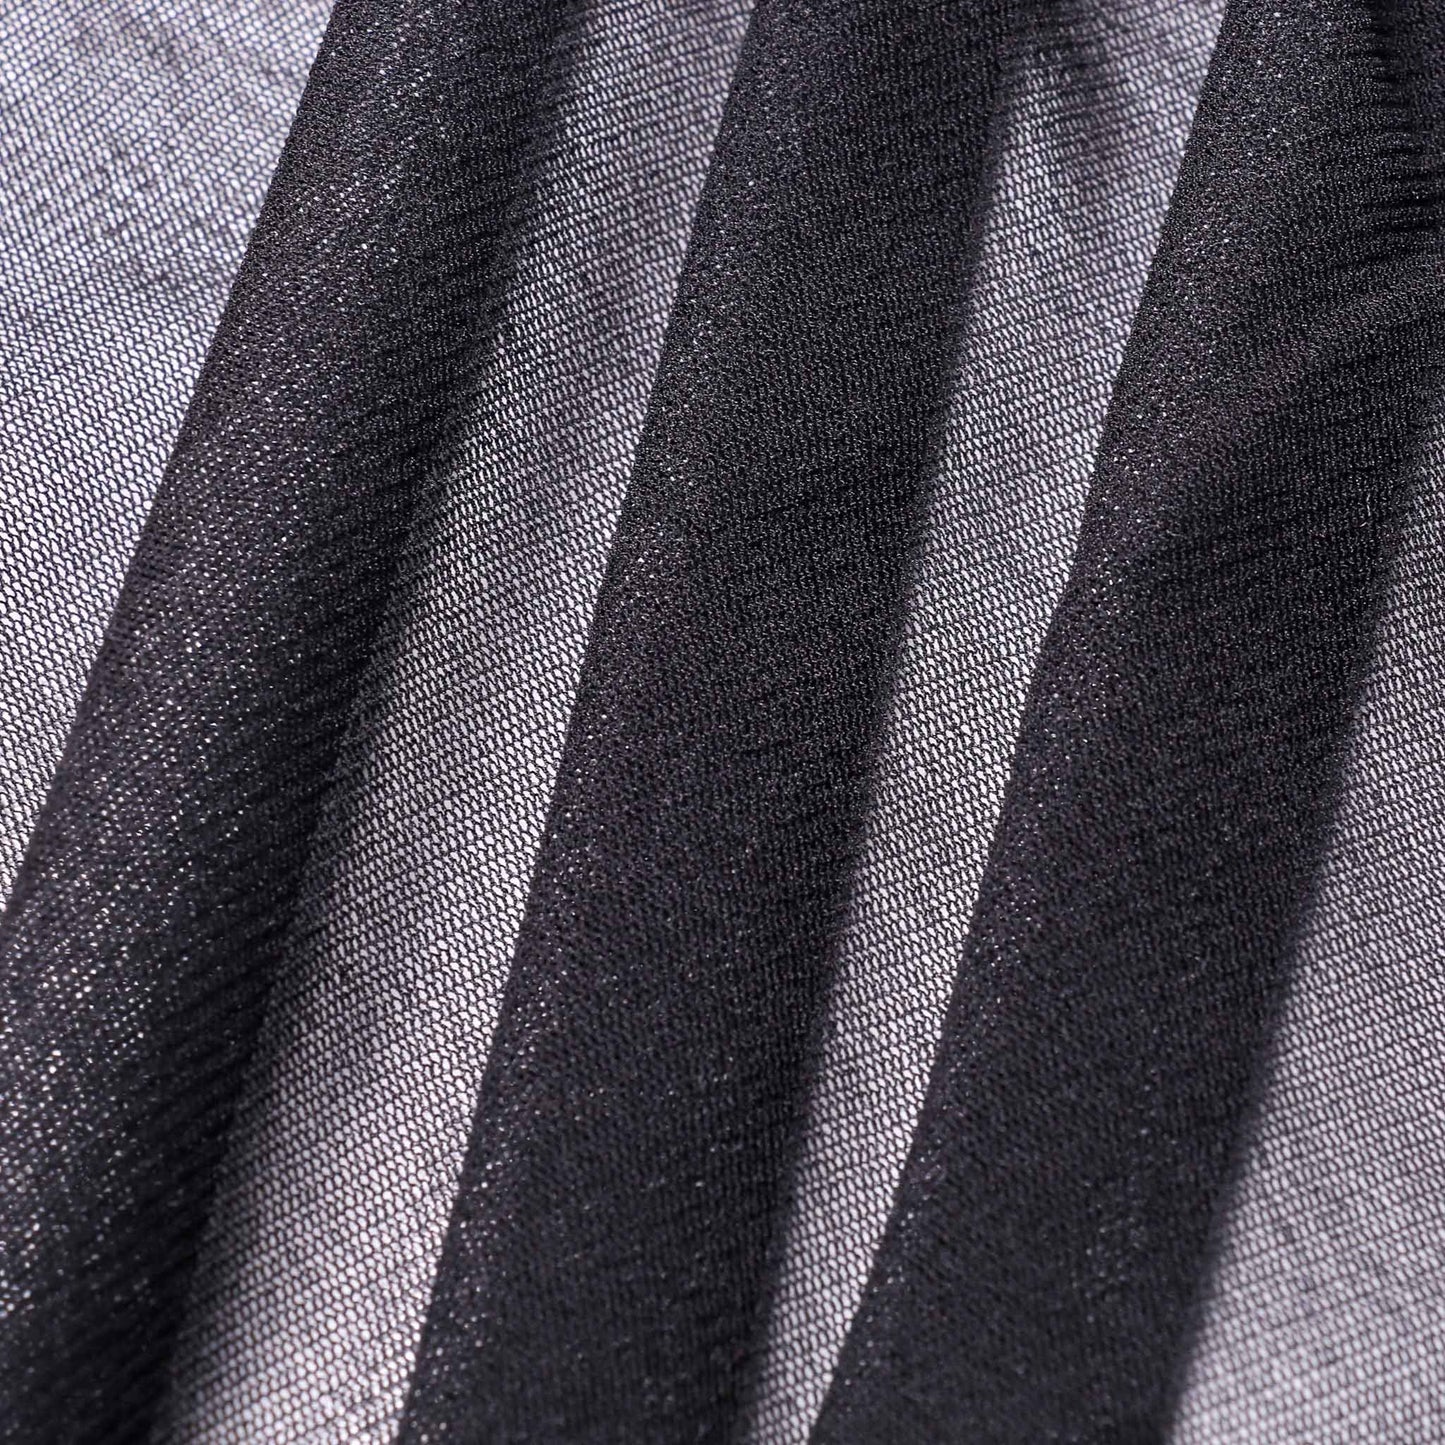 black netting stretch dressmaking fabric